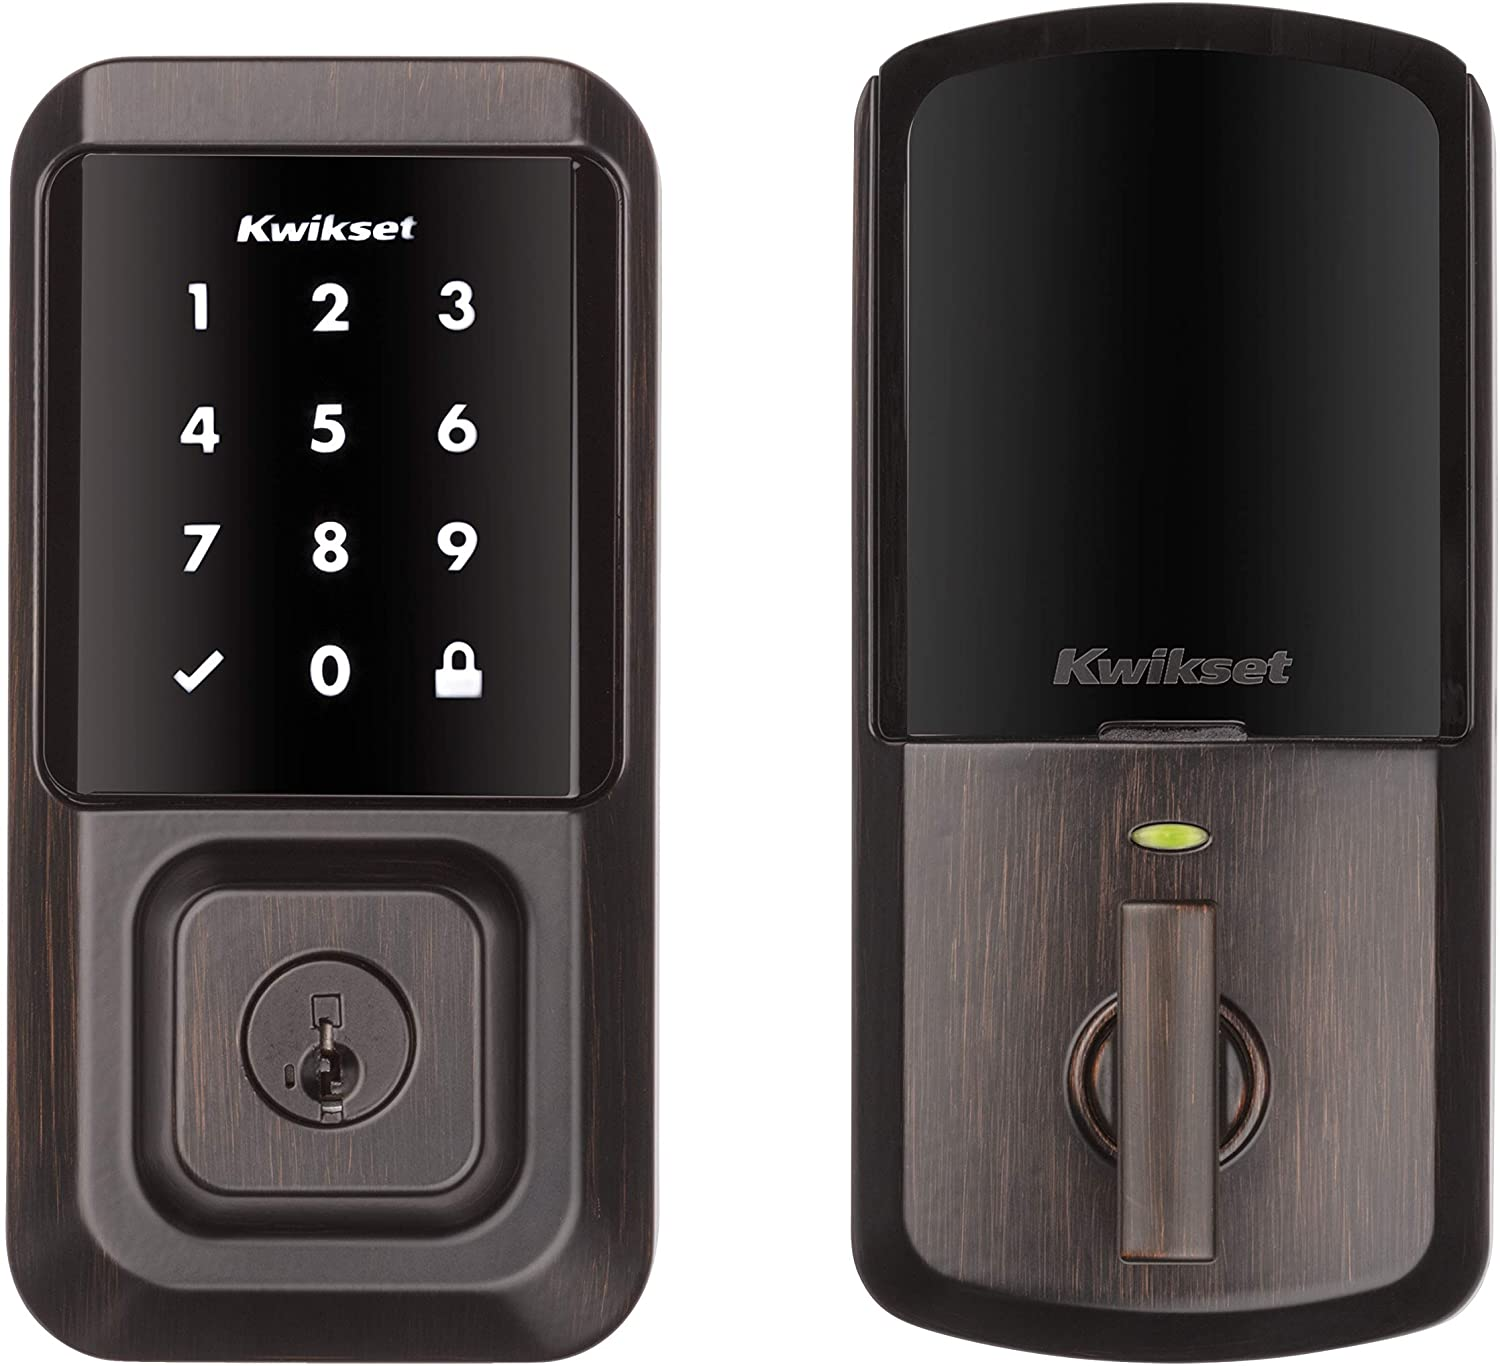 Kwikset 99390-002 Halo Wi-Fi Smart Lock Keyless Entry Electronic Touchscreen Deadbolt Featuring SmartKey Security, Venetian Bronze - - Amazon.com $175.19